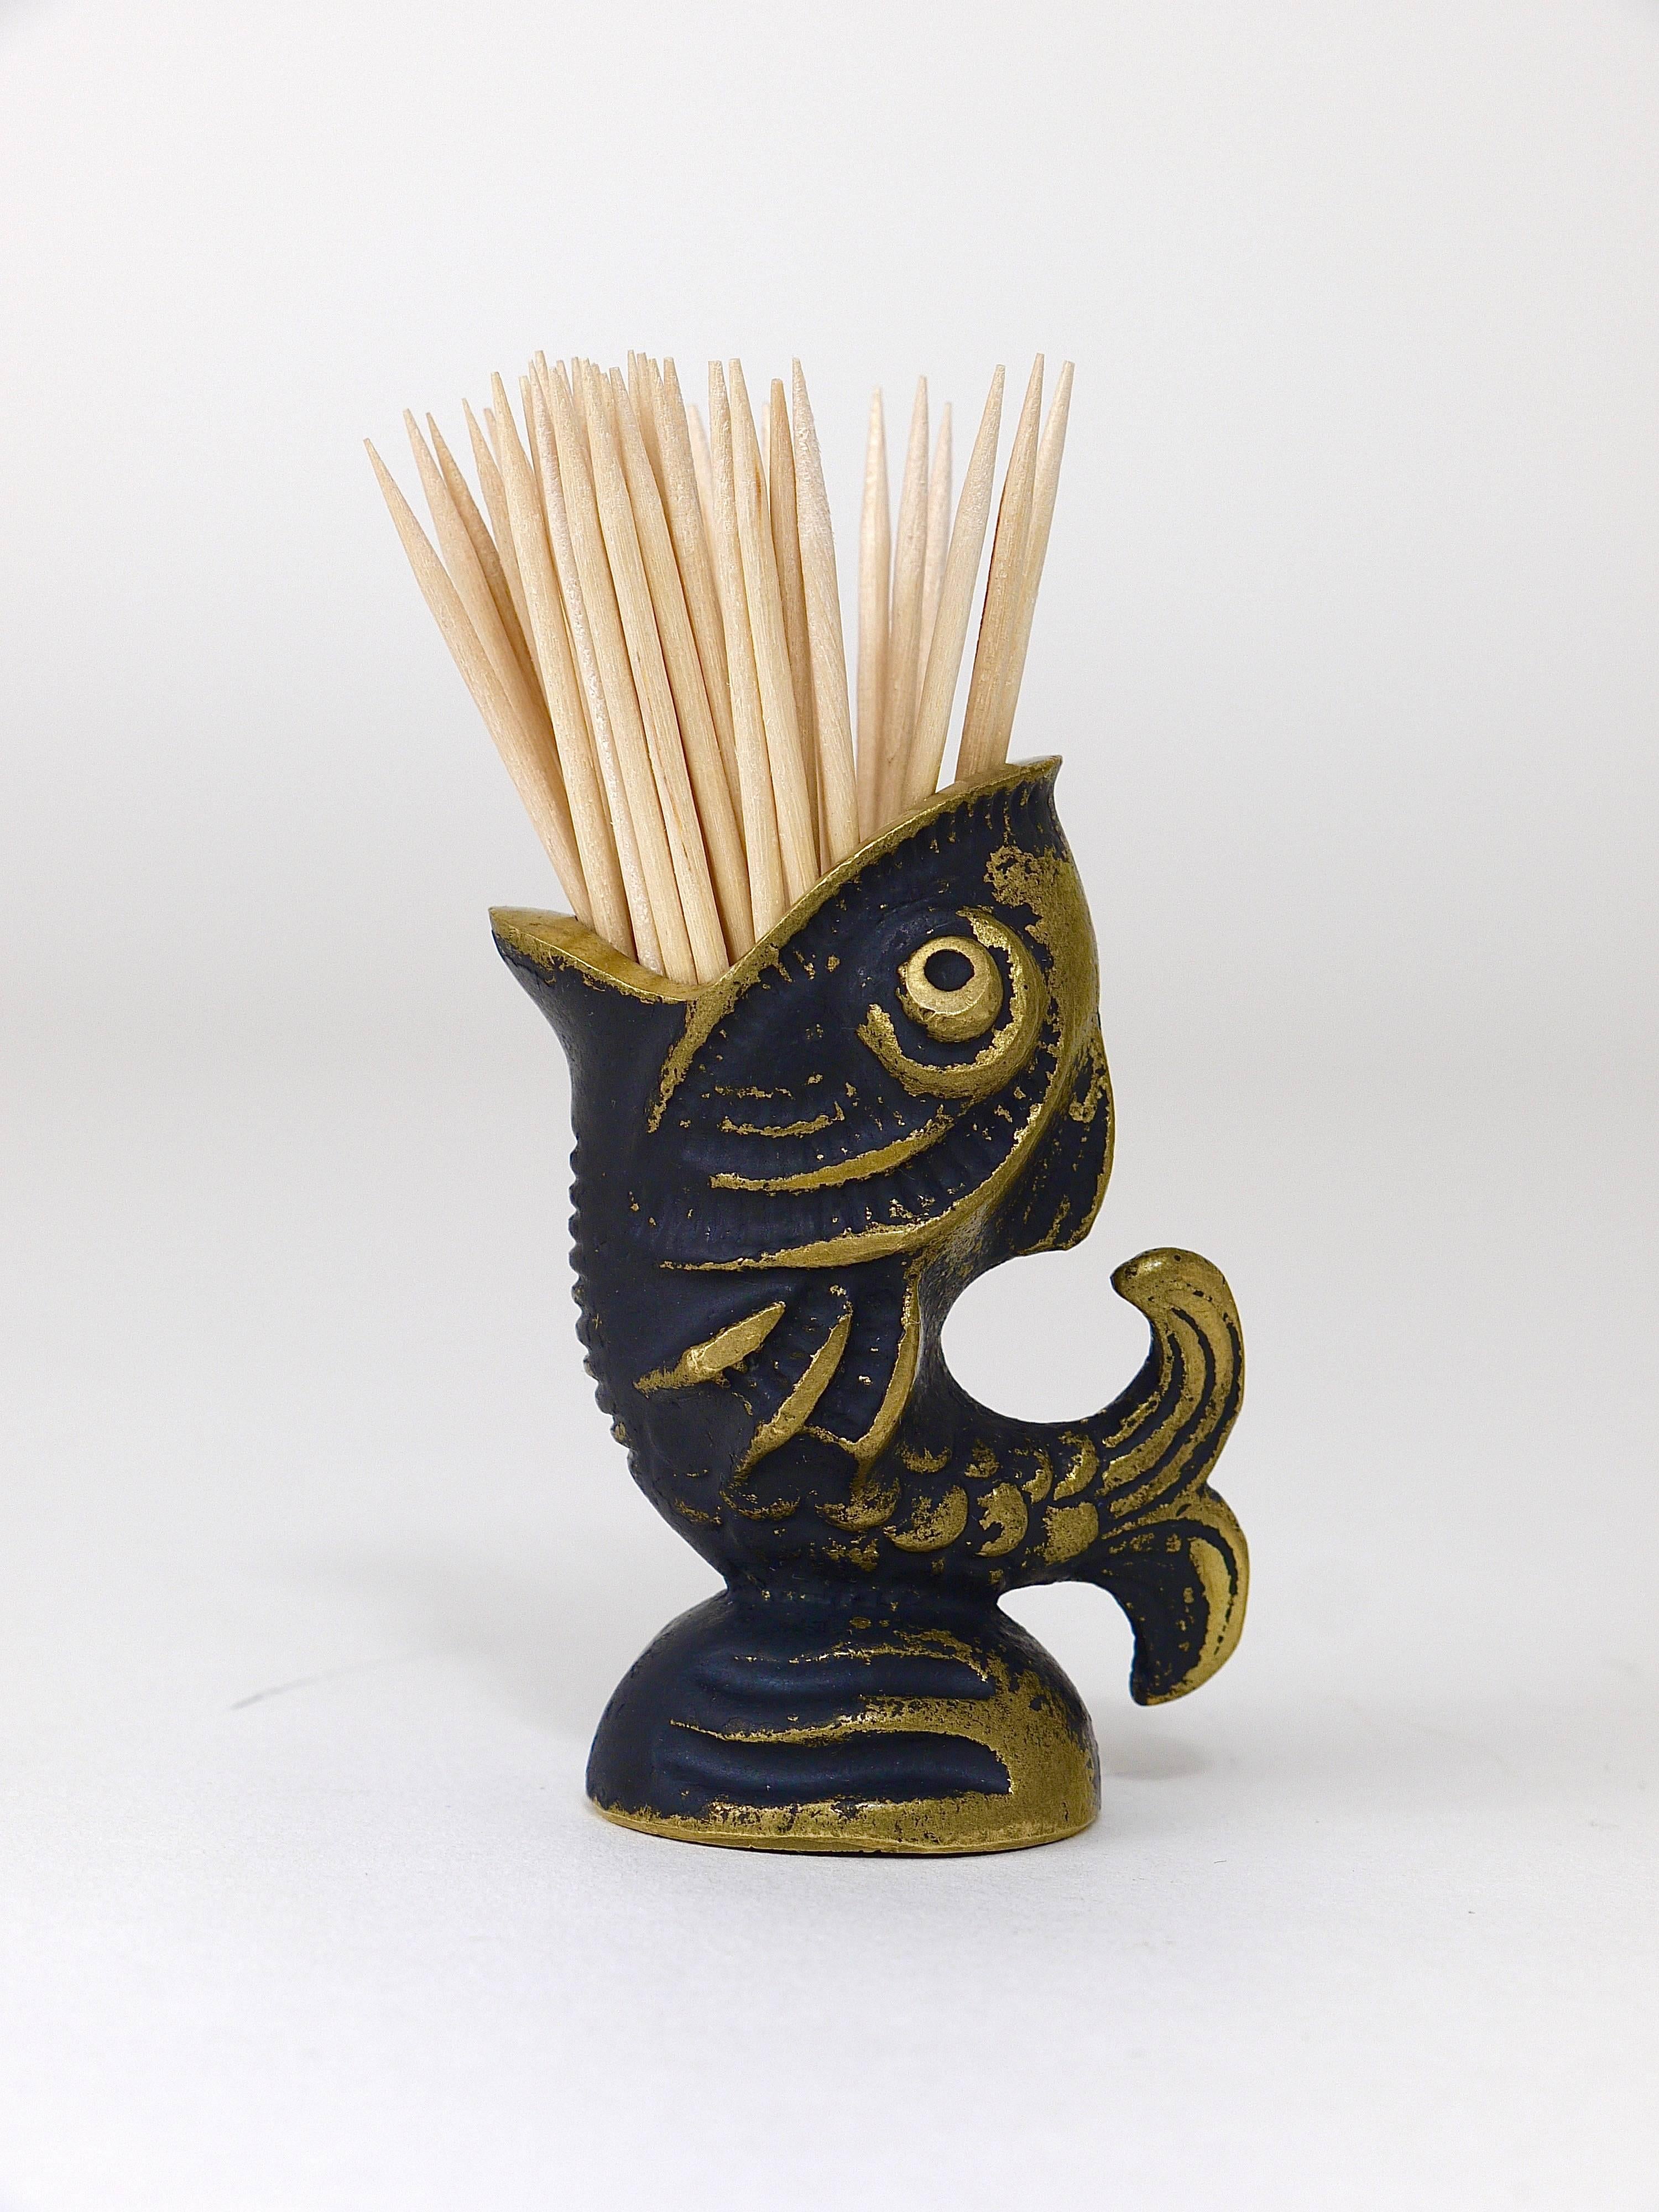 Mid-Century Modern Walter Bosse Fish Brass Sculpture Toothpick Stand, Hertha Baller, Austria, 1950s